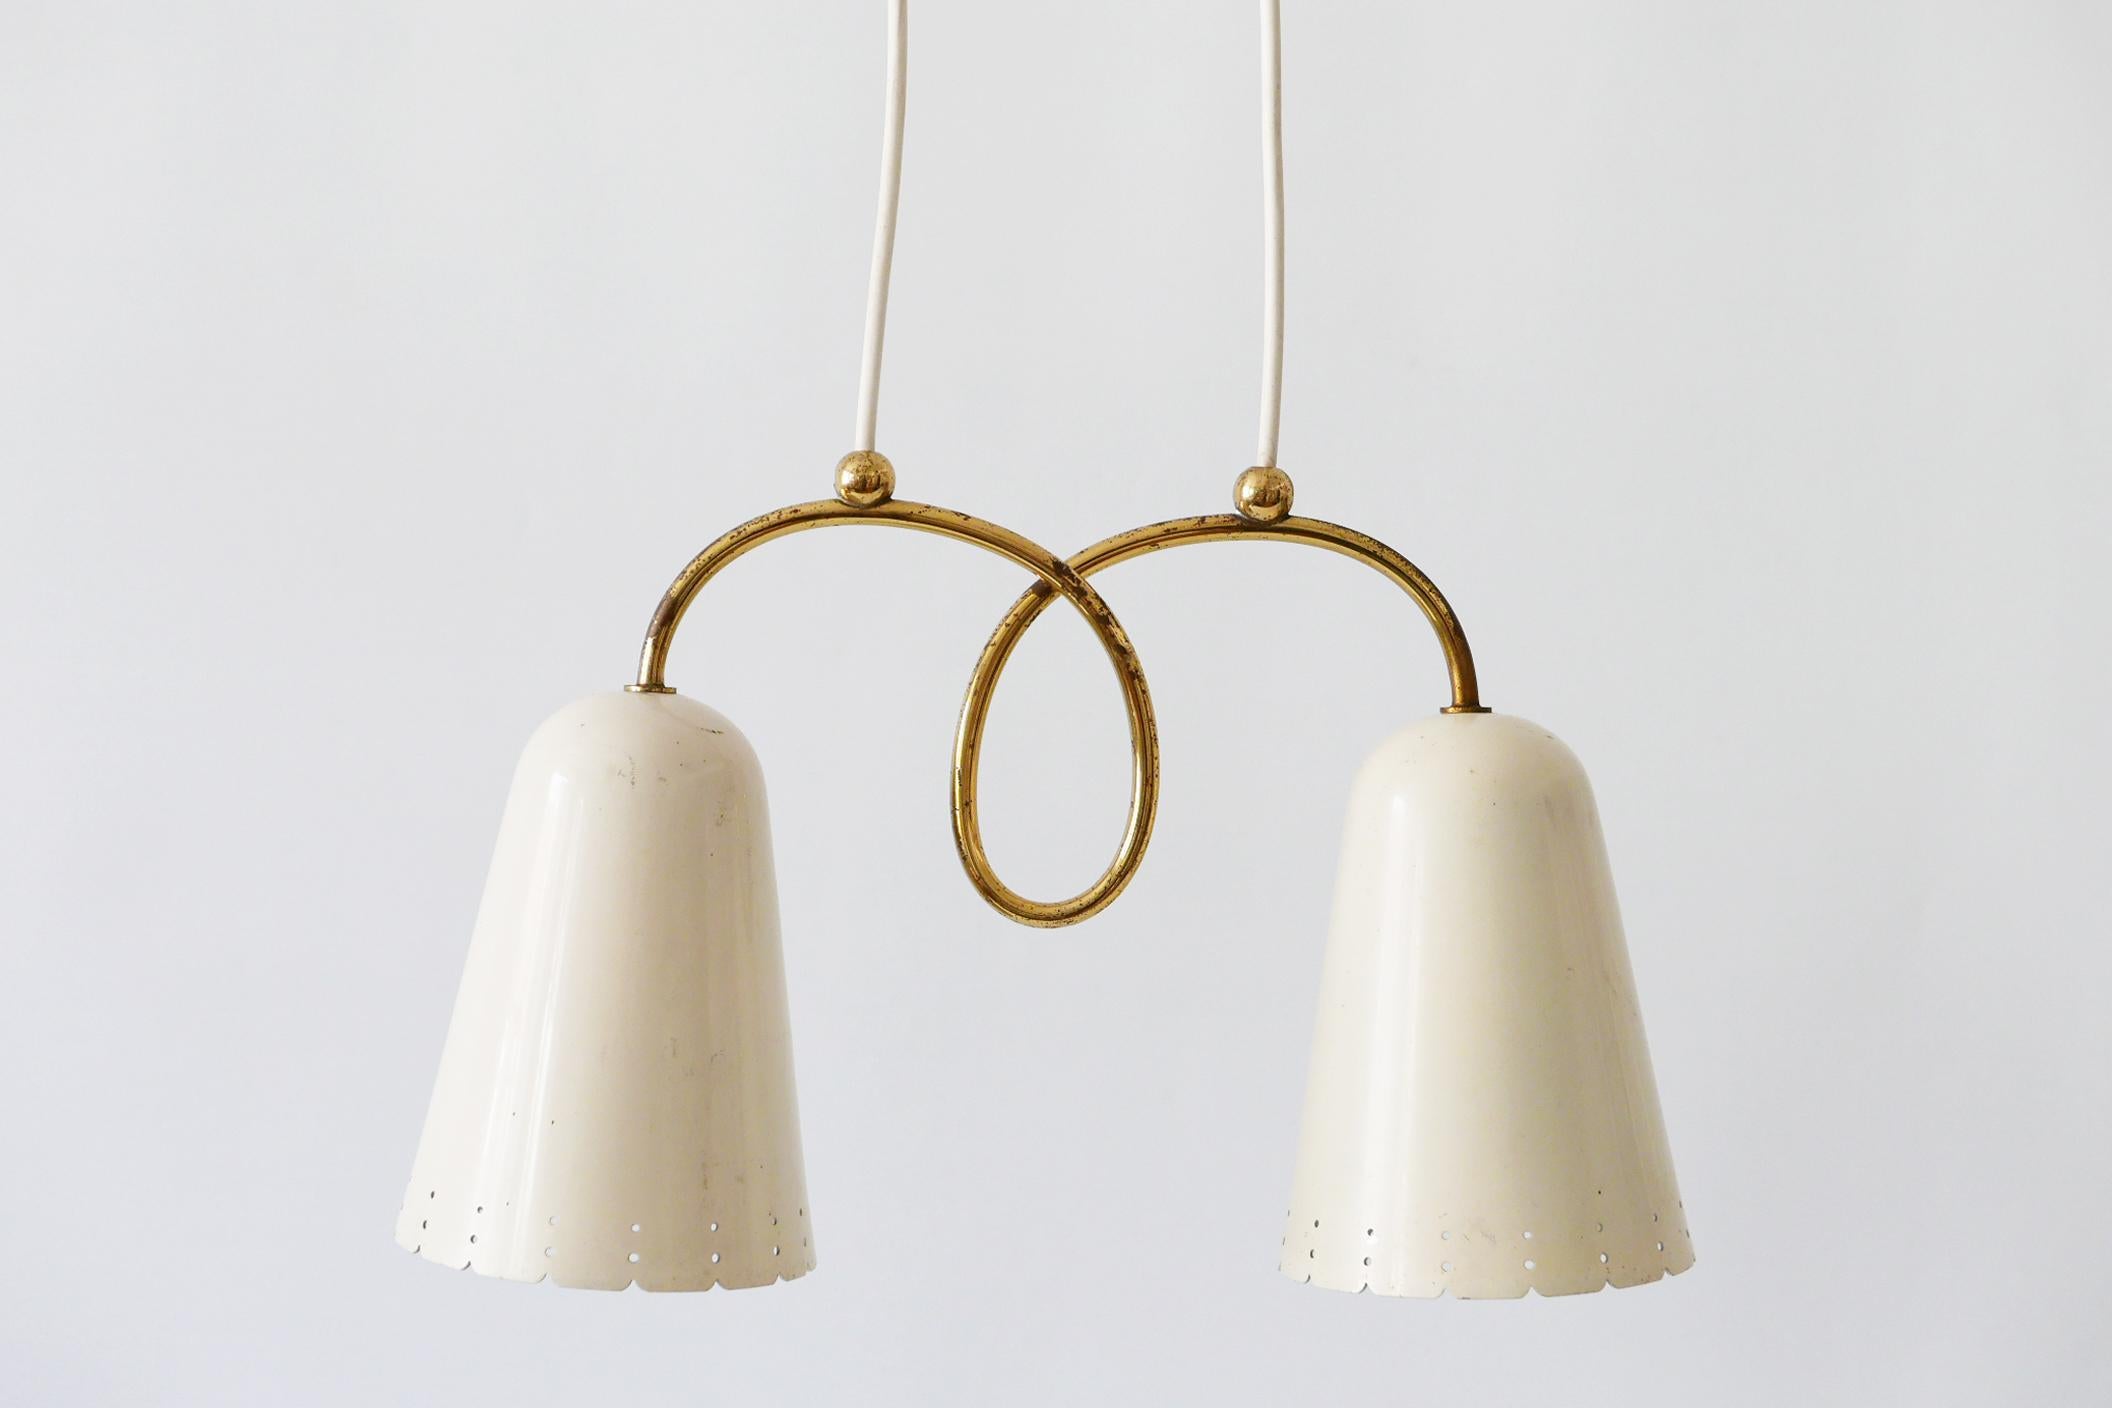 Mid-20th Century Rare Mid-Century Modern Double Head Pendant Lamp or Hanging Light 1950s, Germany